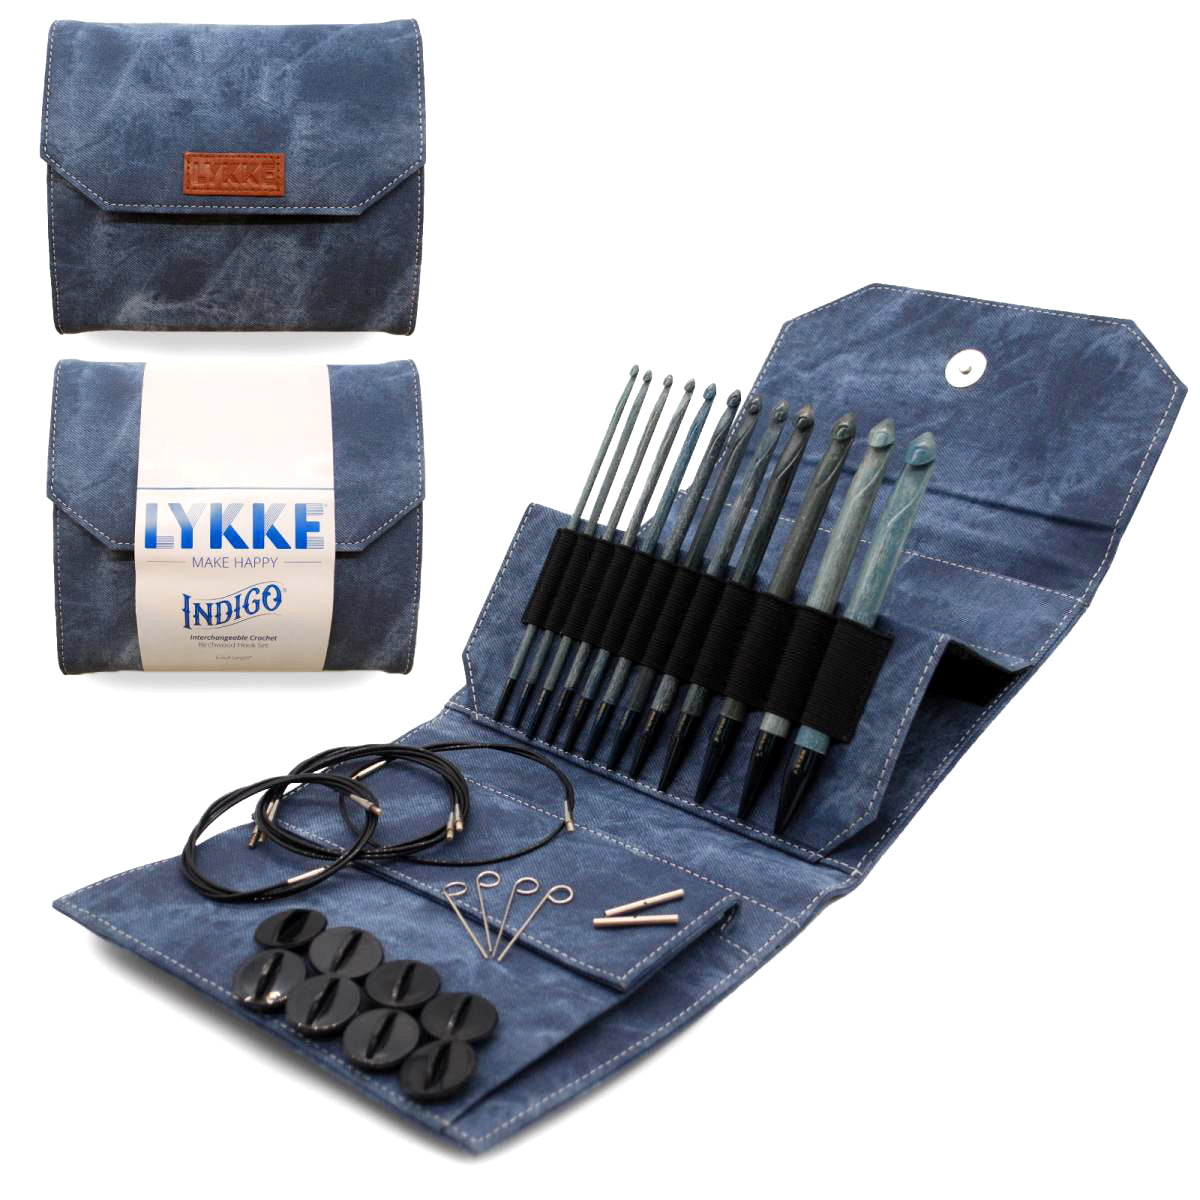 LYKKE Indigo 6 Interchangeable Crochet Hook Set – The Needle Store